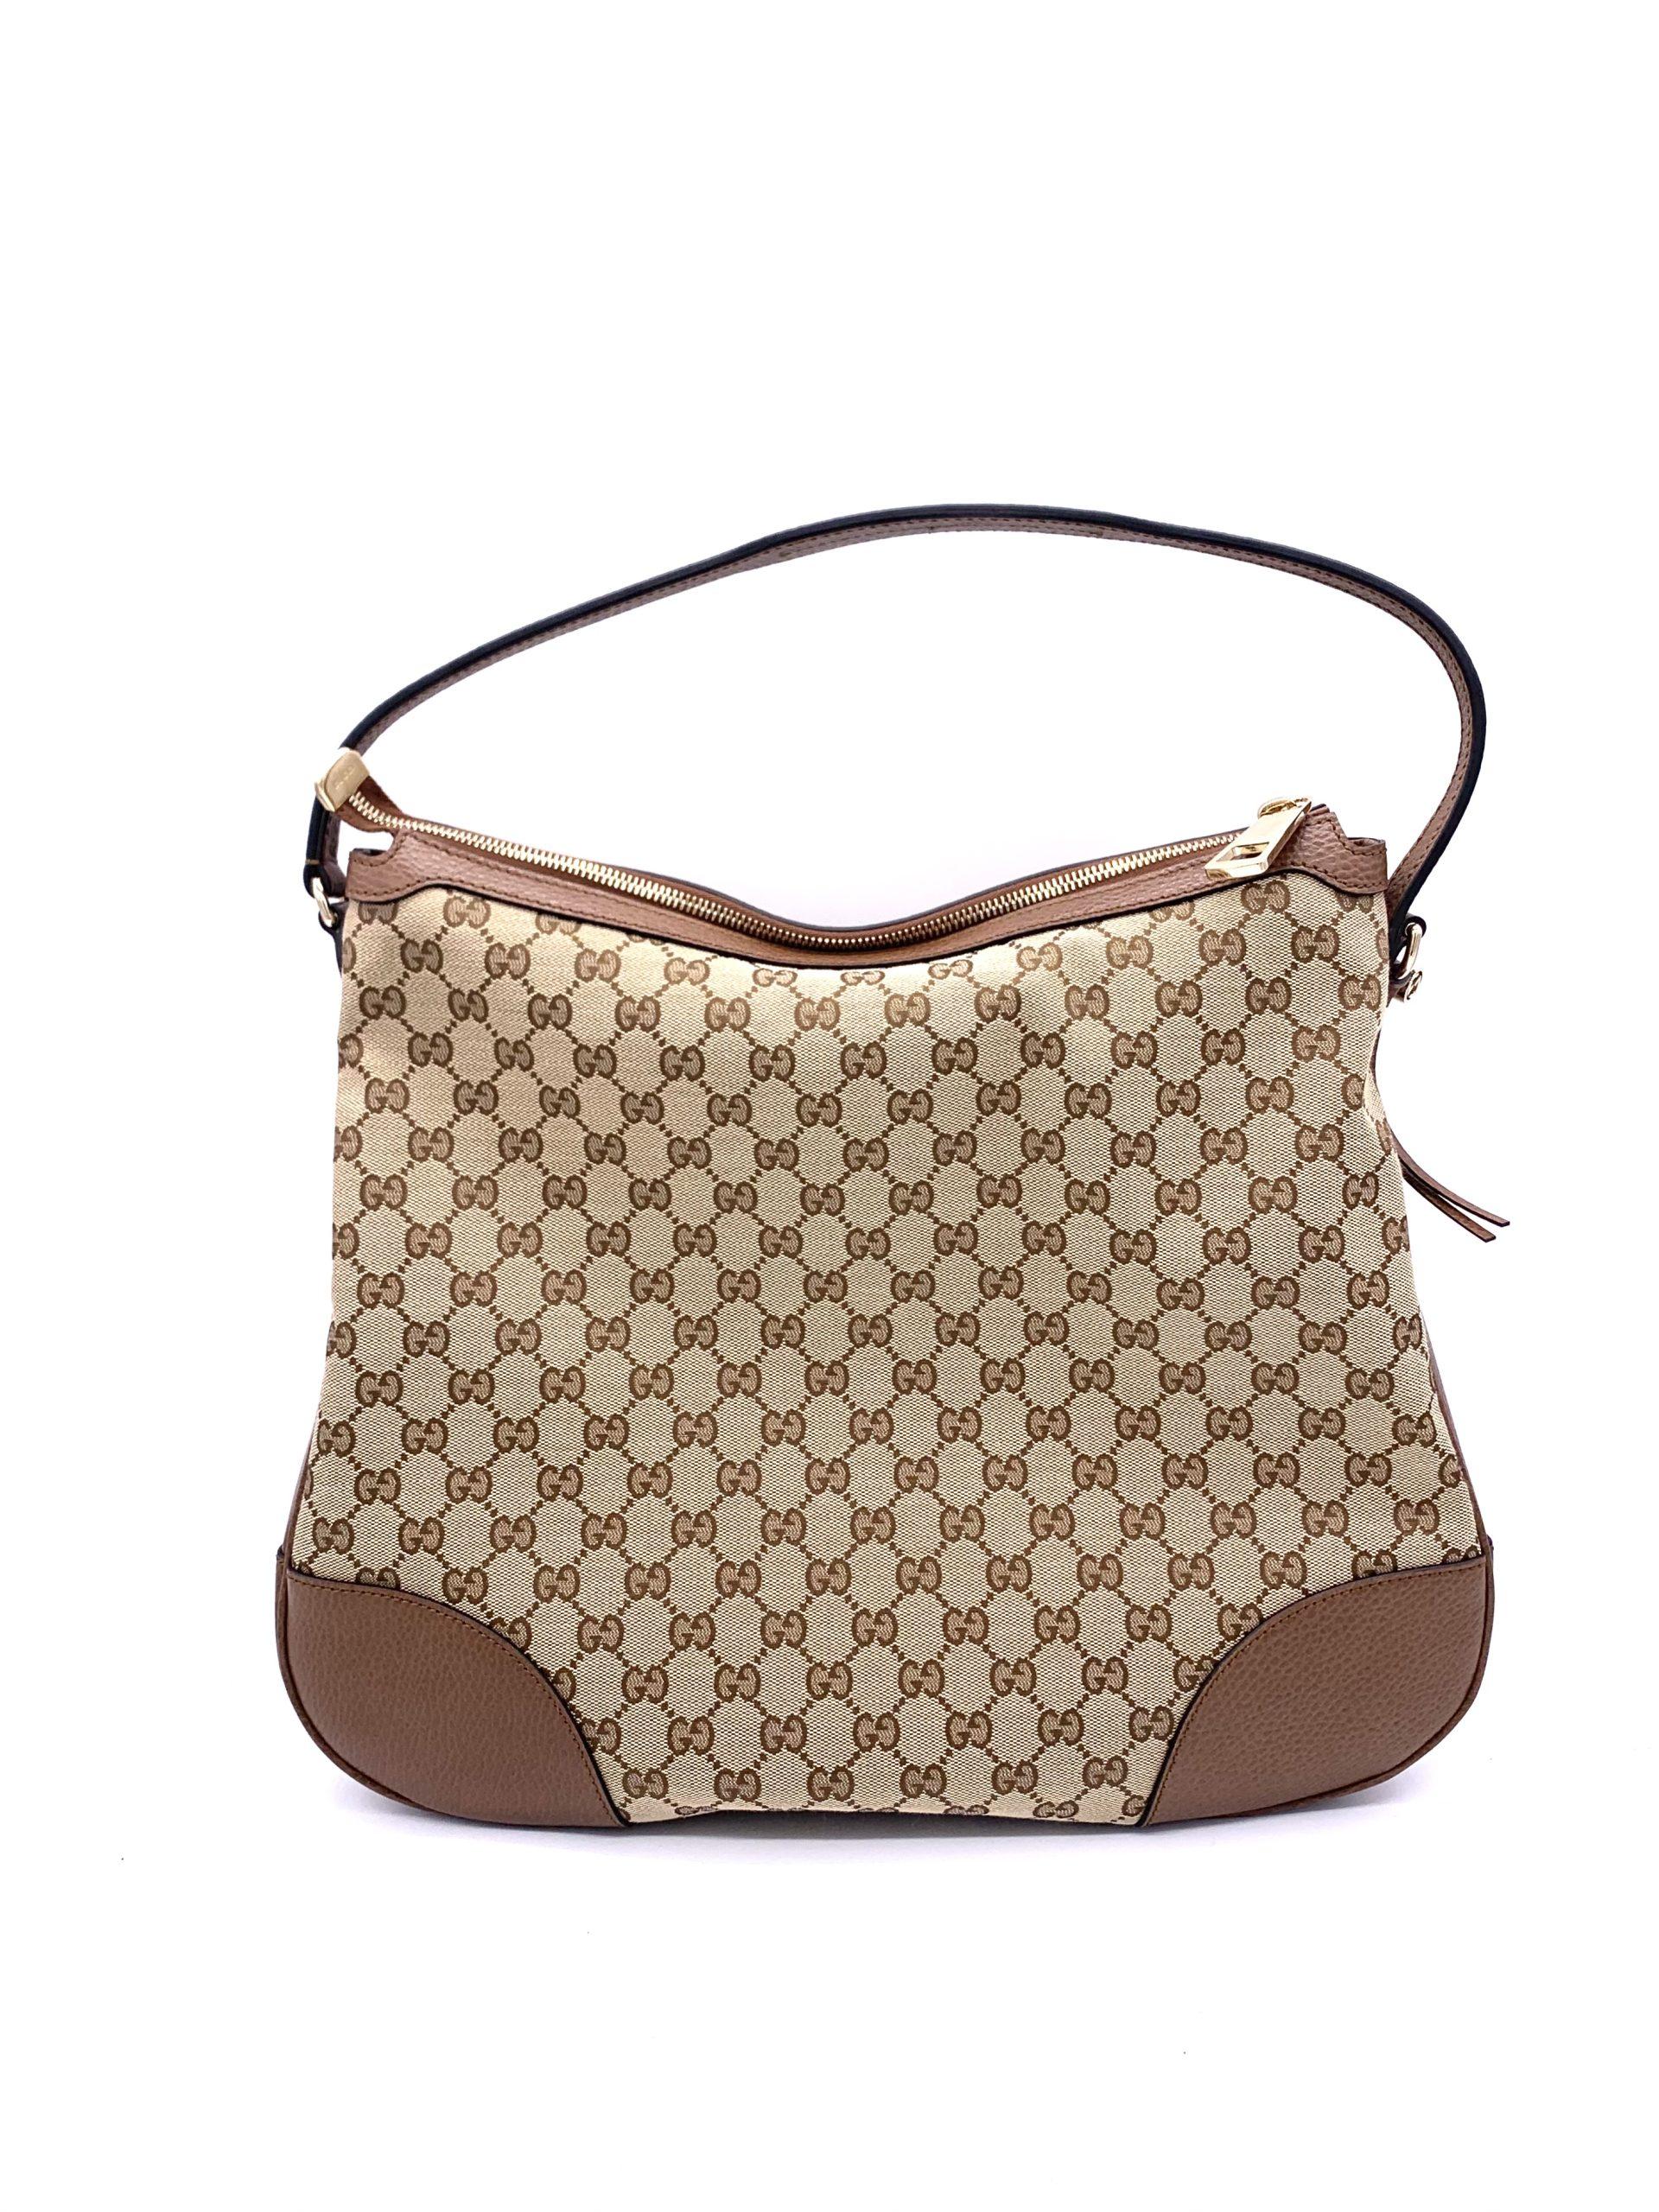 Women's Gucci Bree Hobo Bag For Sale